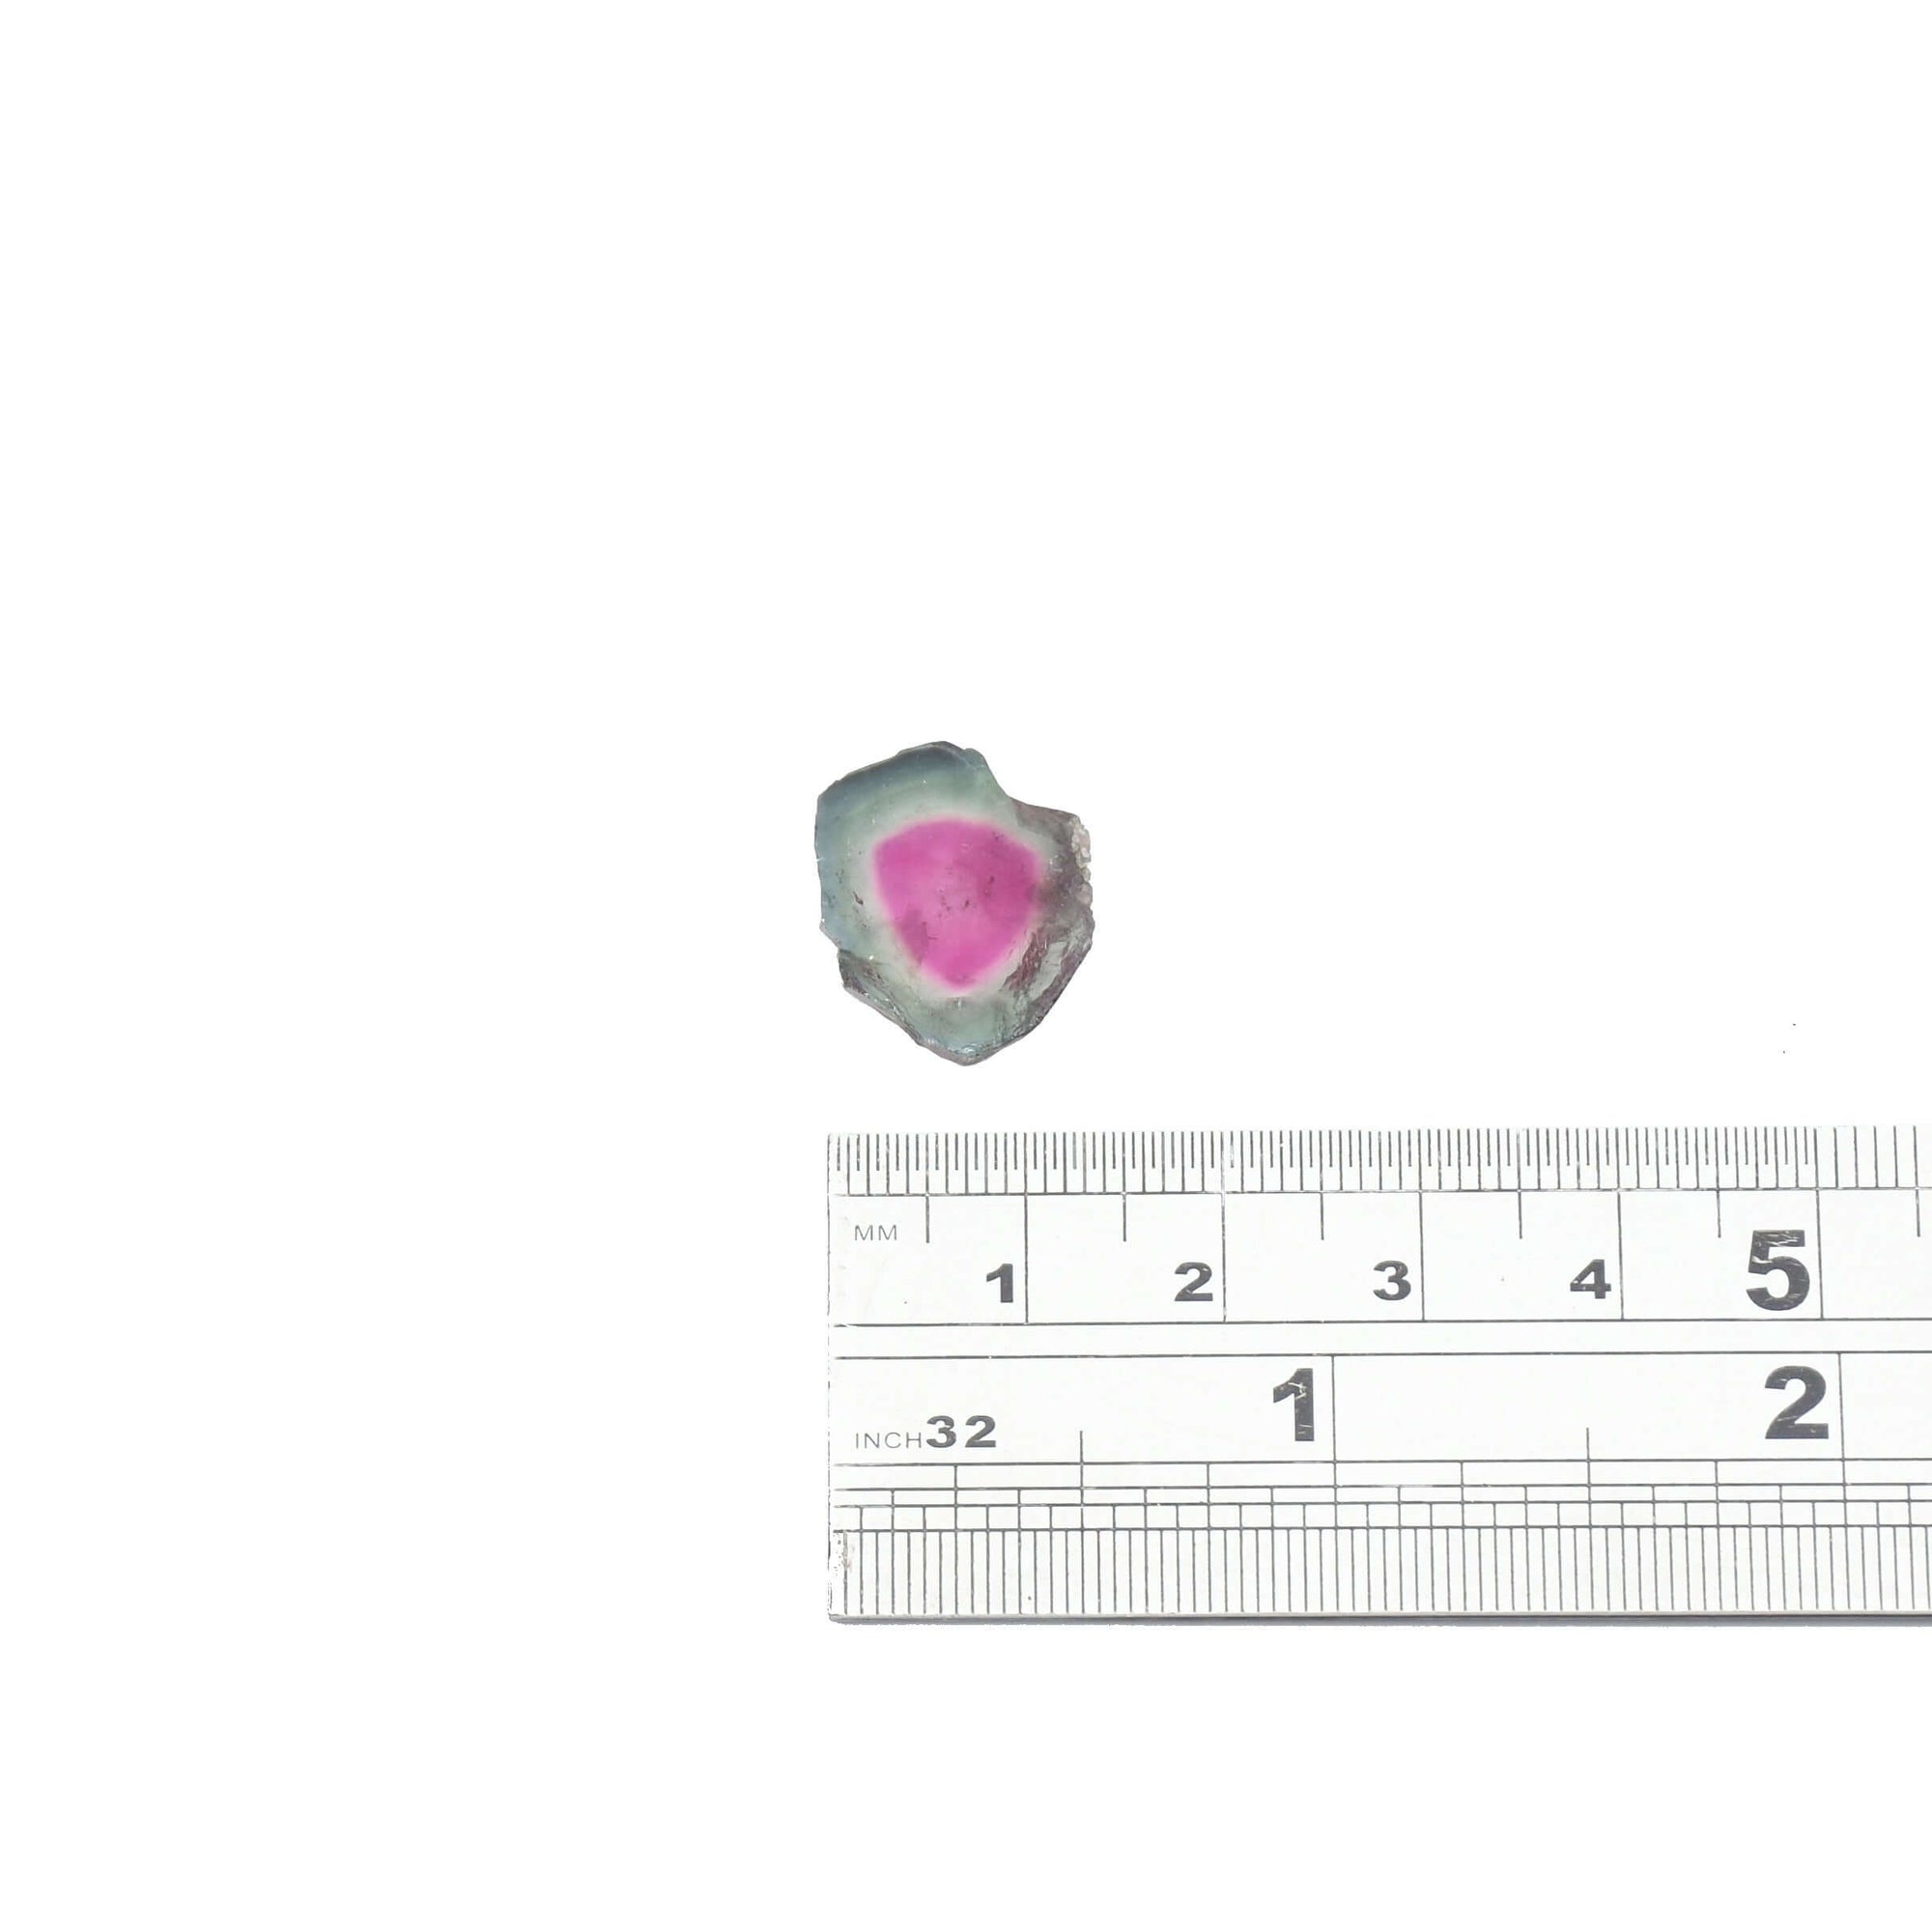 This teal and pink tourmaline slice would make beautiful watermelon tourmaline jewelry